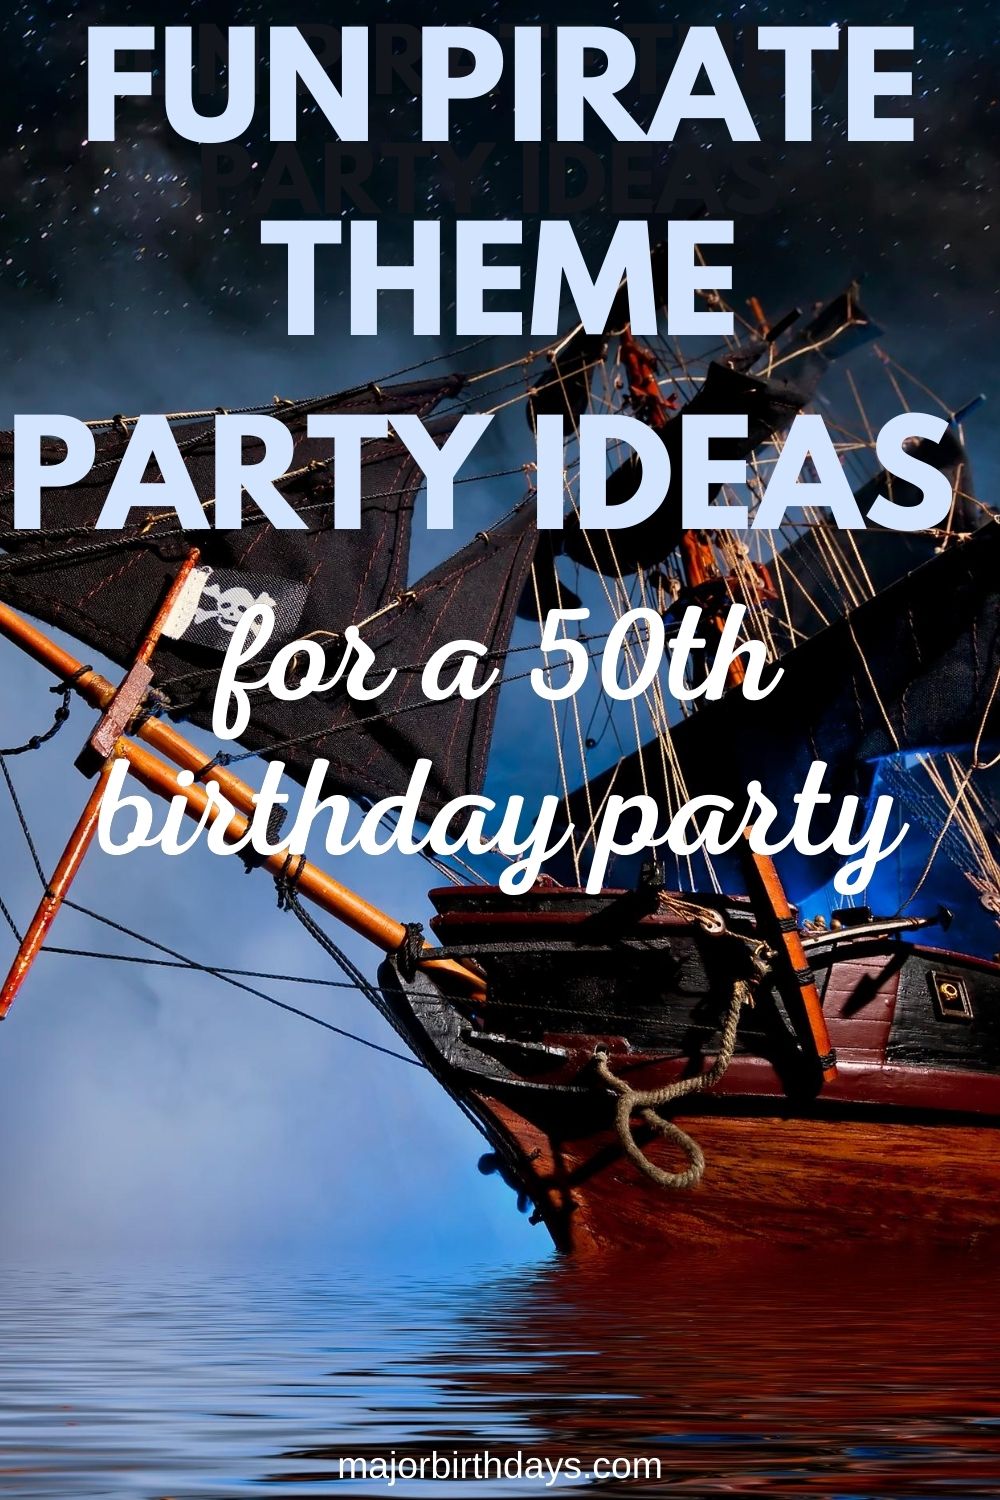 Fun pirate theme party ideas for 50th birthday - Pinterset image